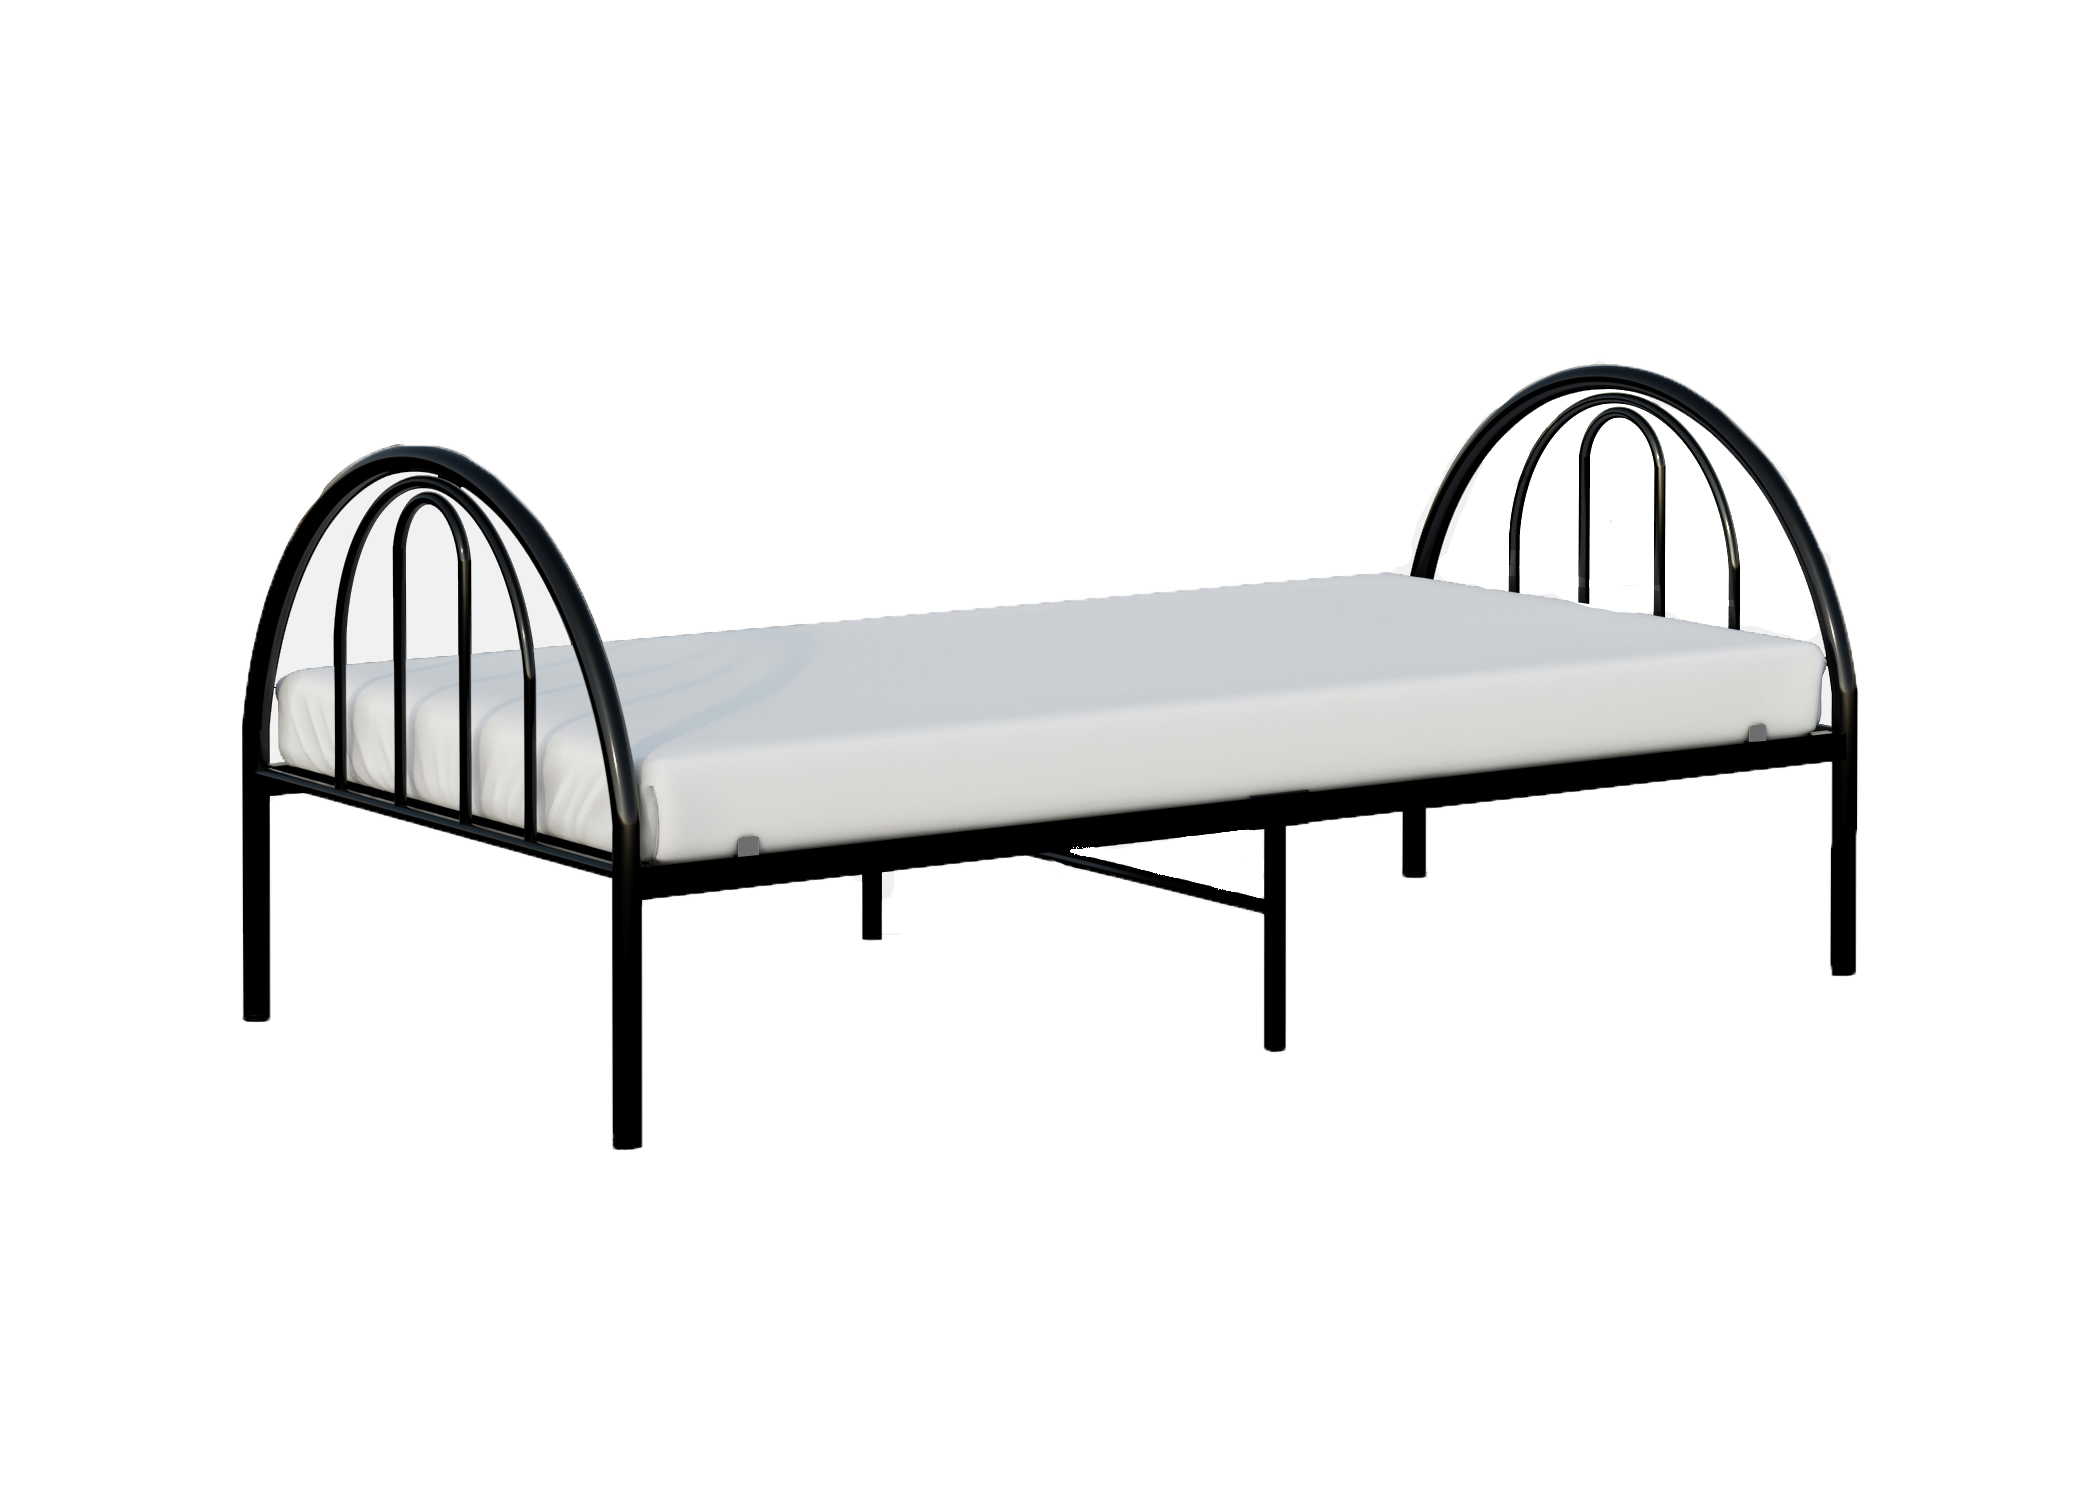 BK Furniture Brooklyn Classic Metal Bed, Twin, Black - image 2 of 4